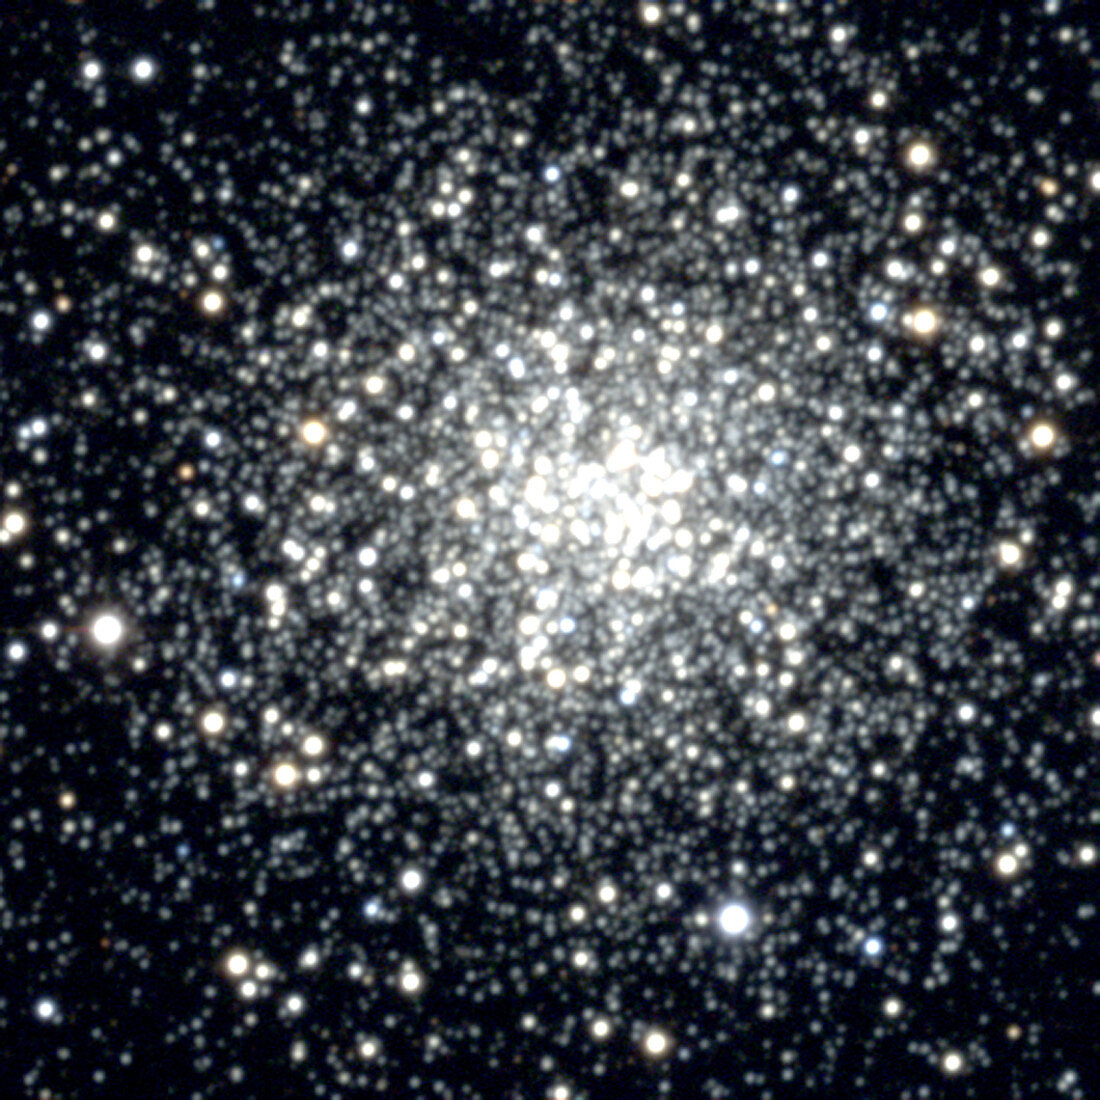 Globular cluster M107